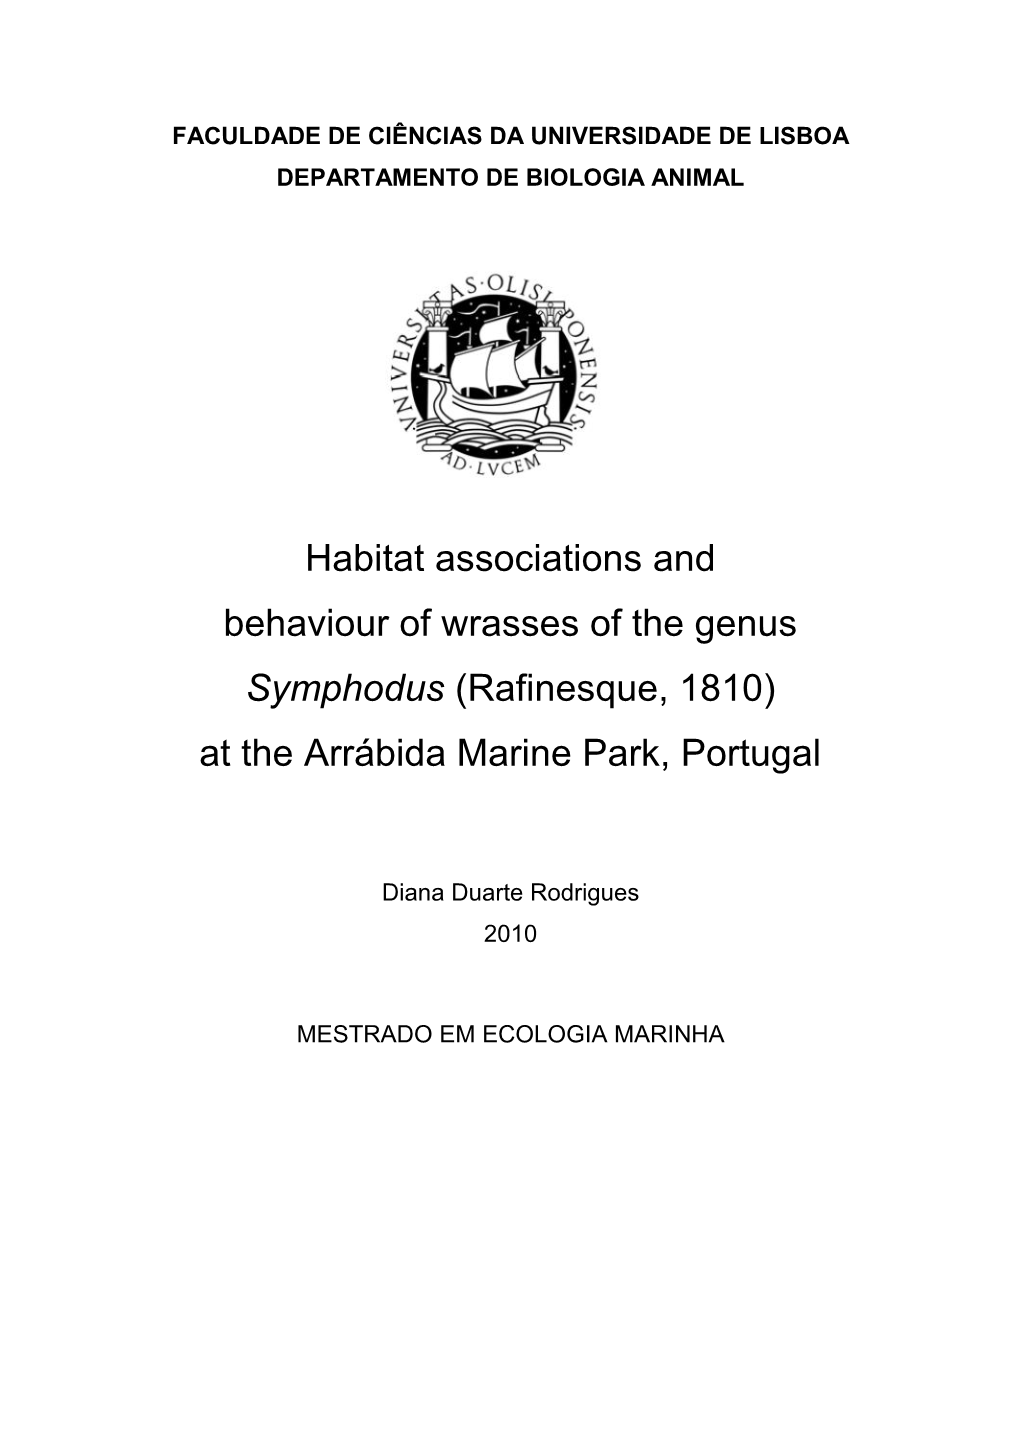 Habitat Associations and Behaviour of Wrasses of the Genus Symphodus (Rafinesque, 1810) at the Arrábida Marine Park, Portugal